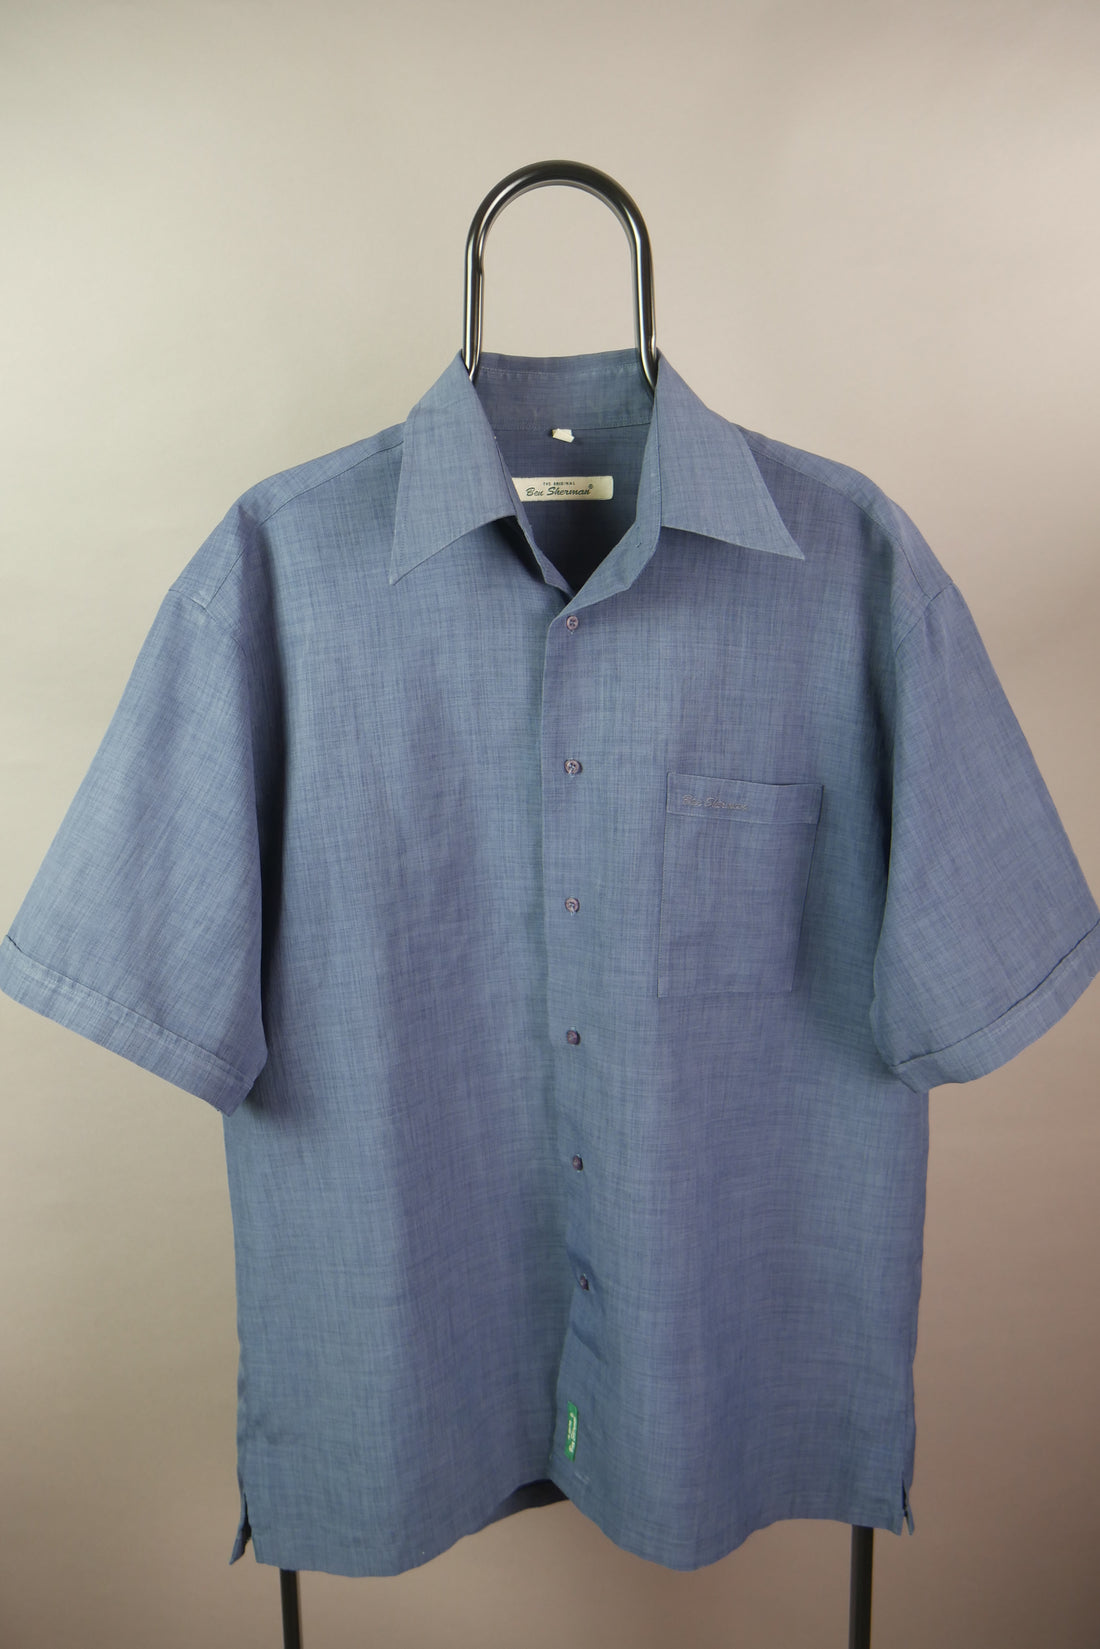 The Vintage Ben Sherman Short Sleeve Shirt (L)